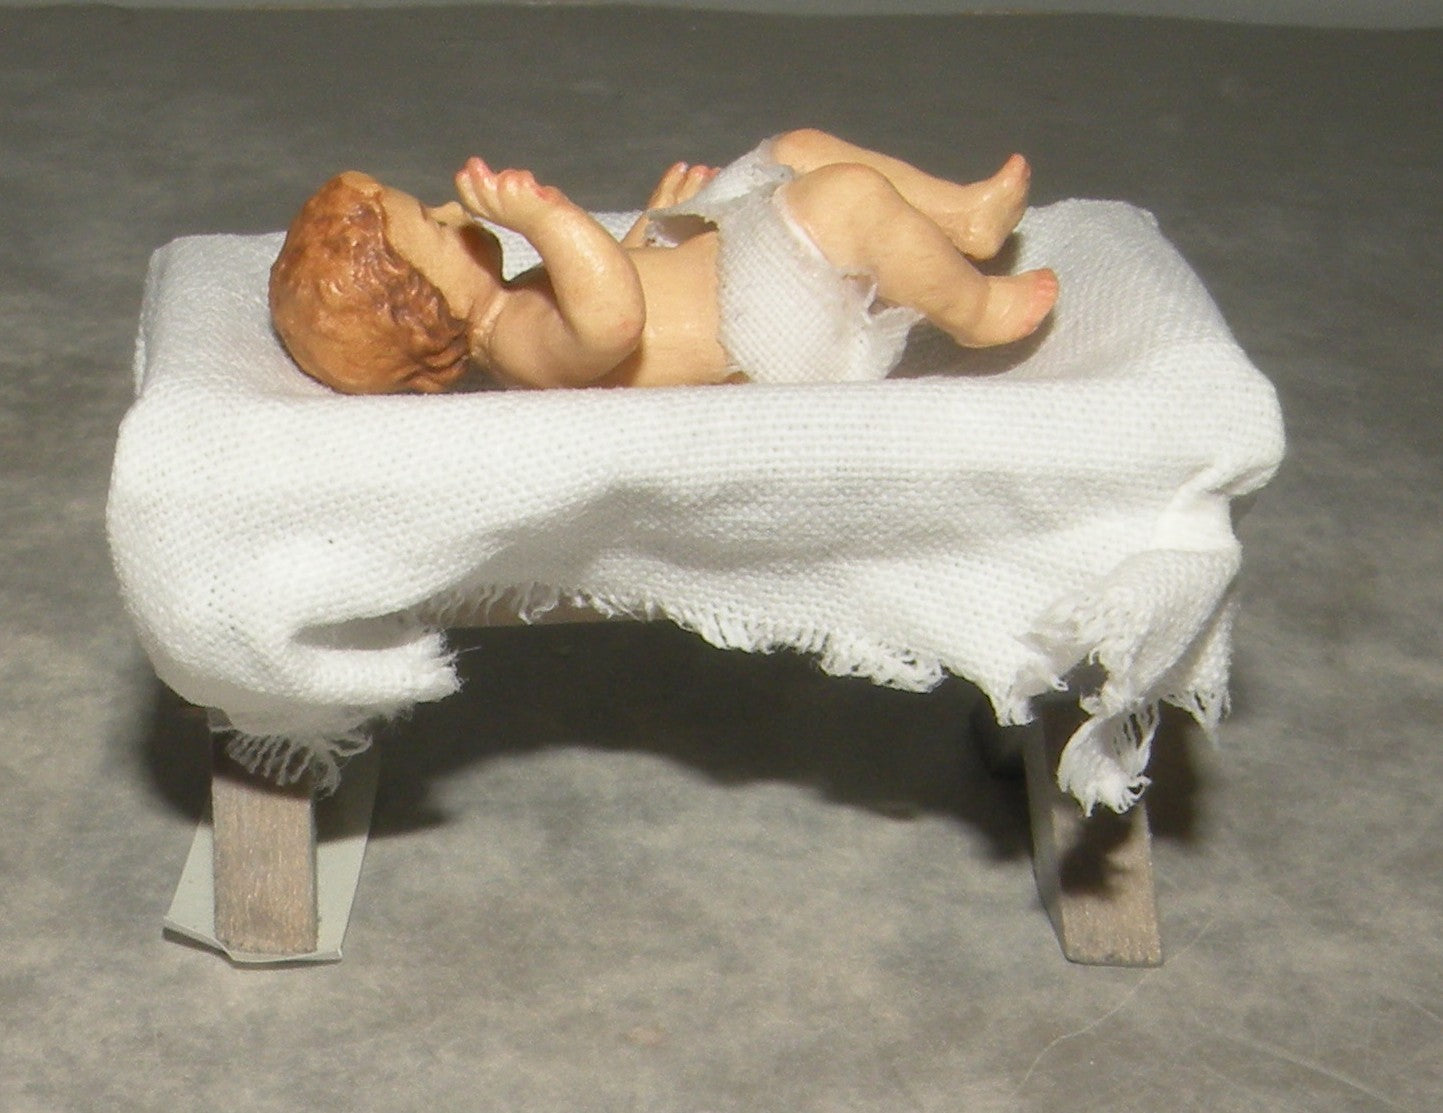 Infant Jesus with cradle 2 pieces - Folk nativity dressed- 10901-01A